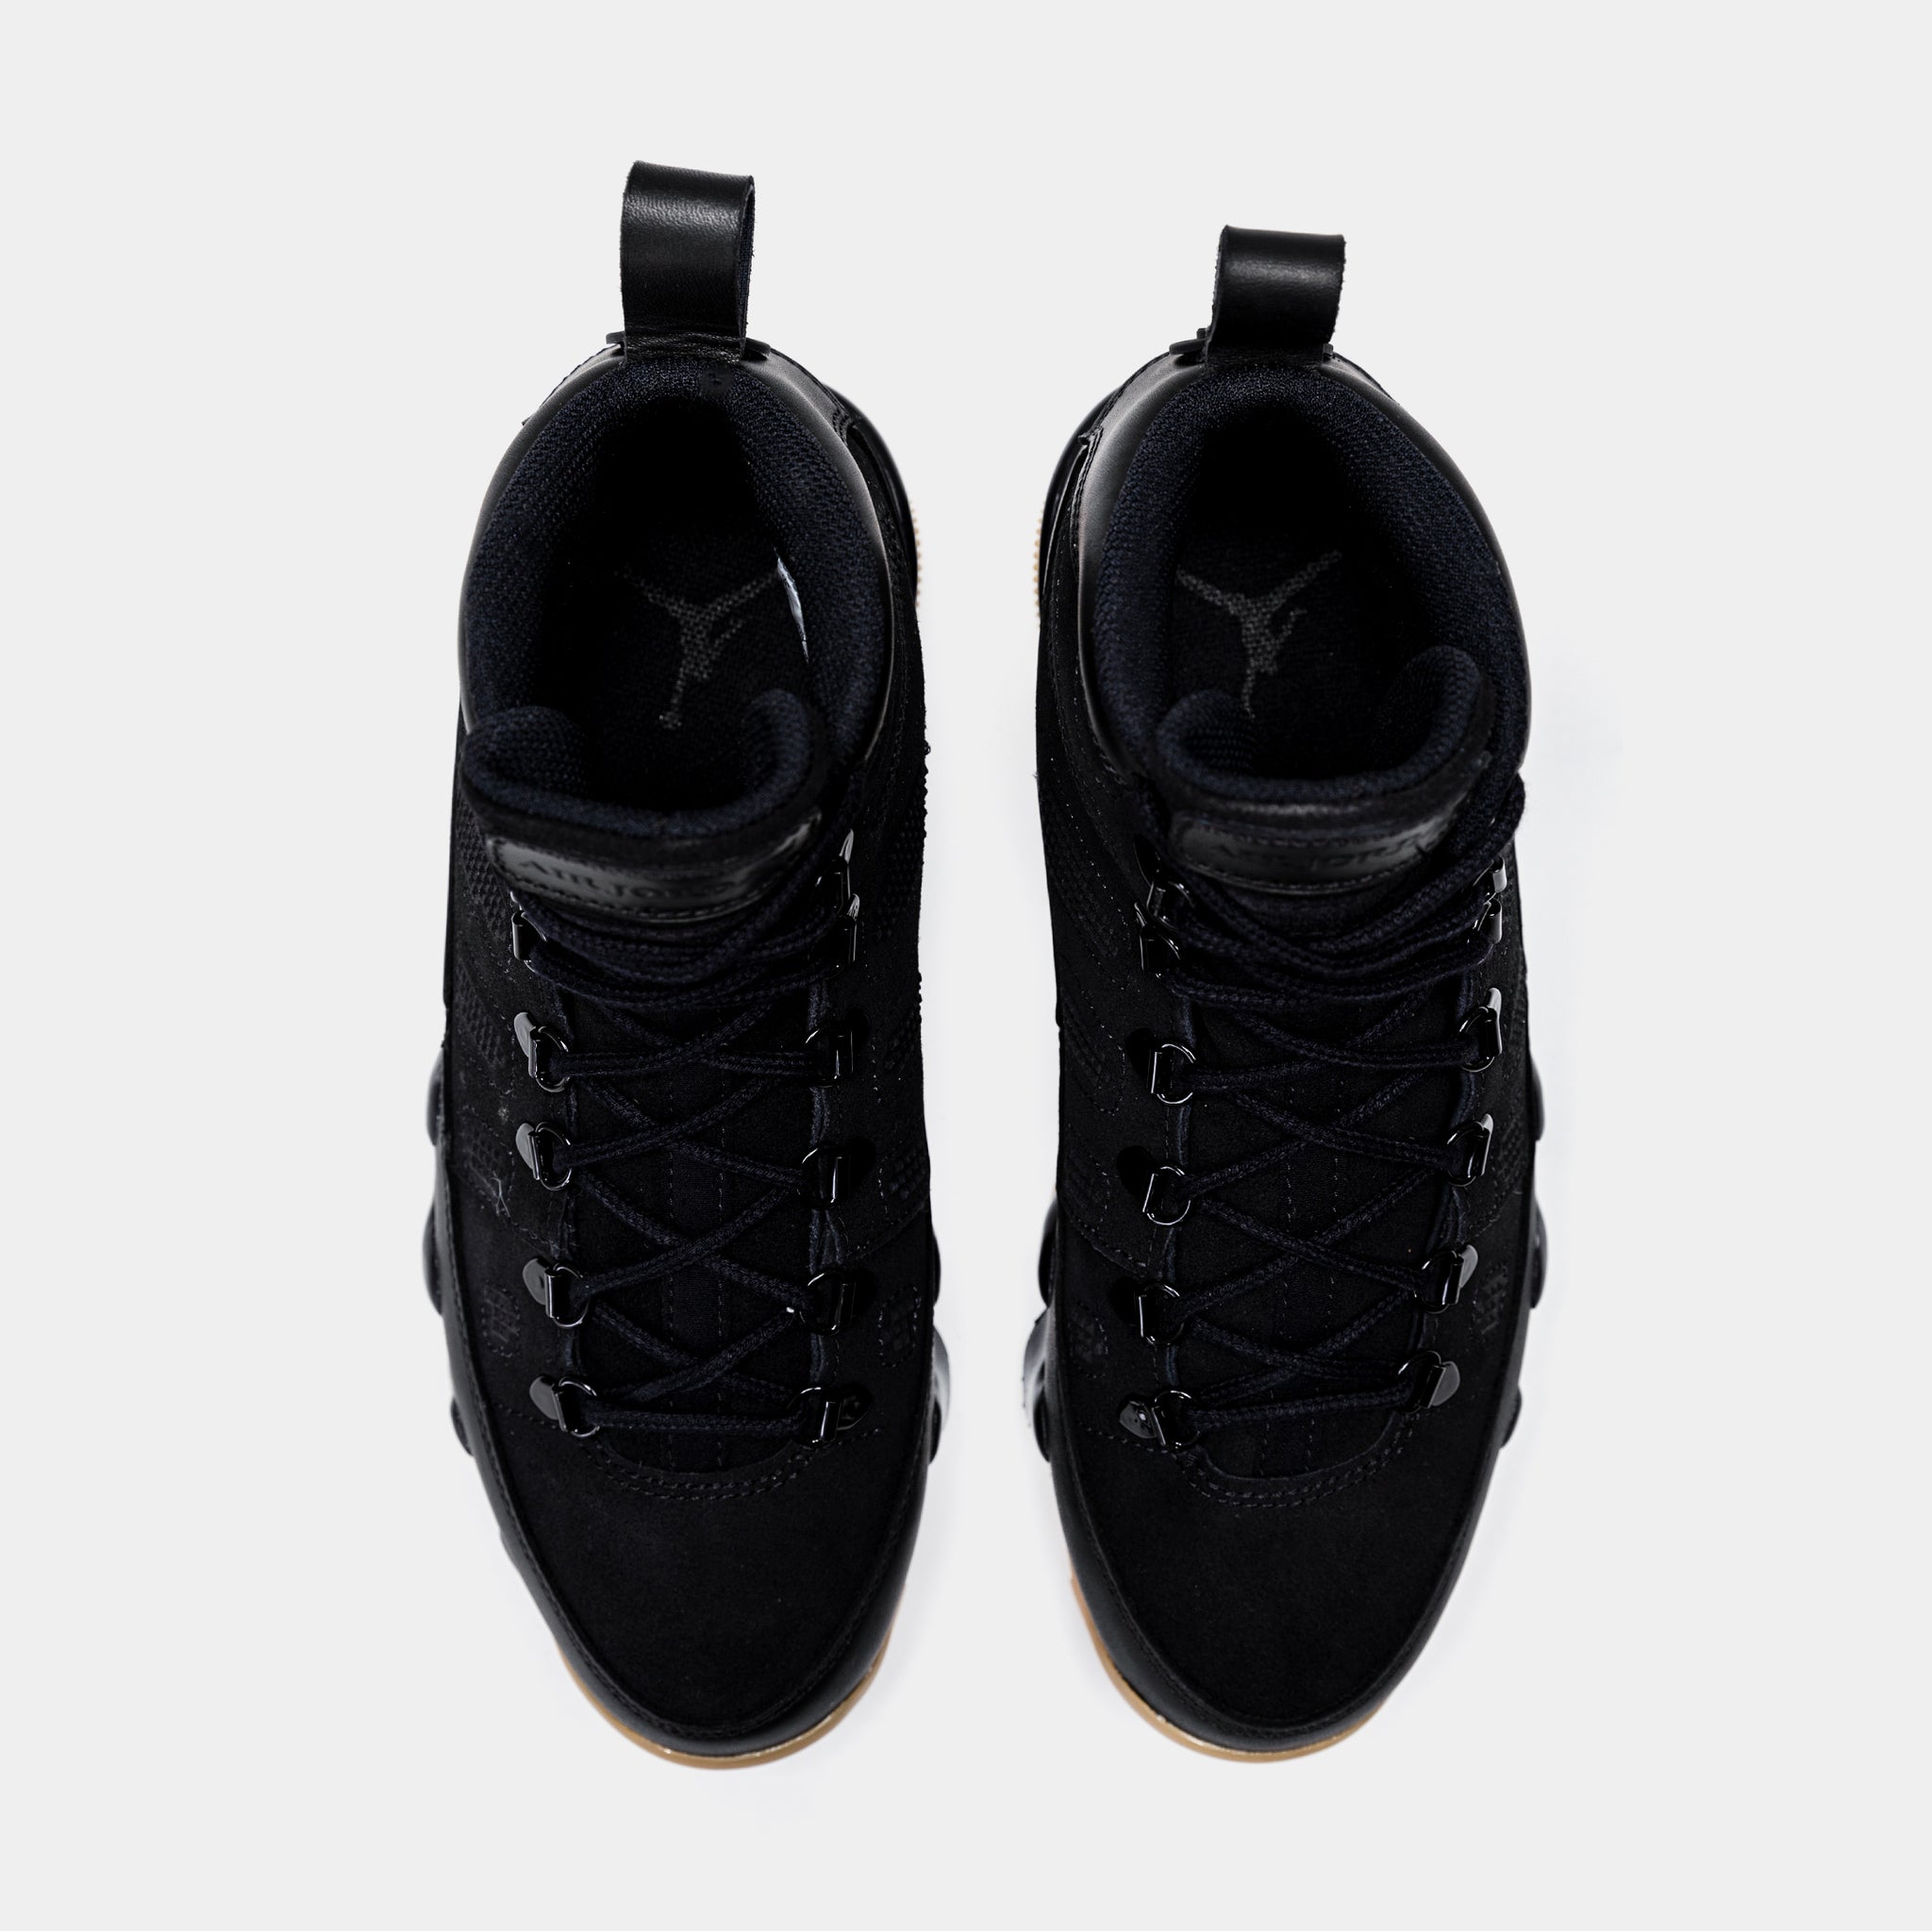 Jordan Air Jordan 9 Retro Boot NRG Black Gum Mens Lifestyle Shoes